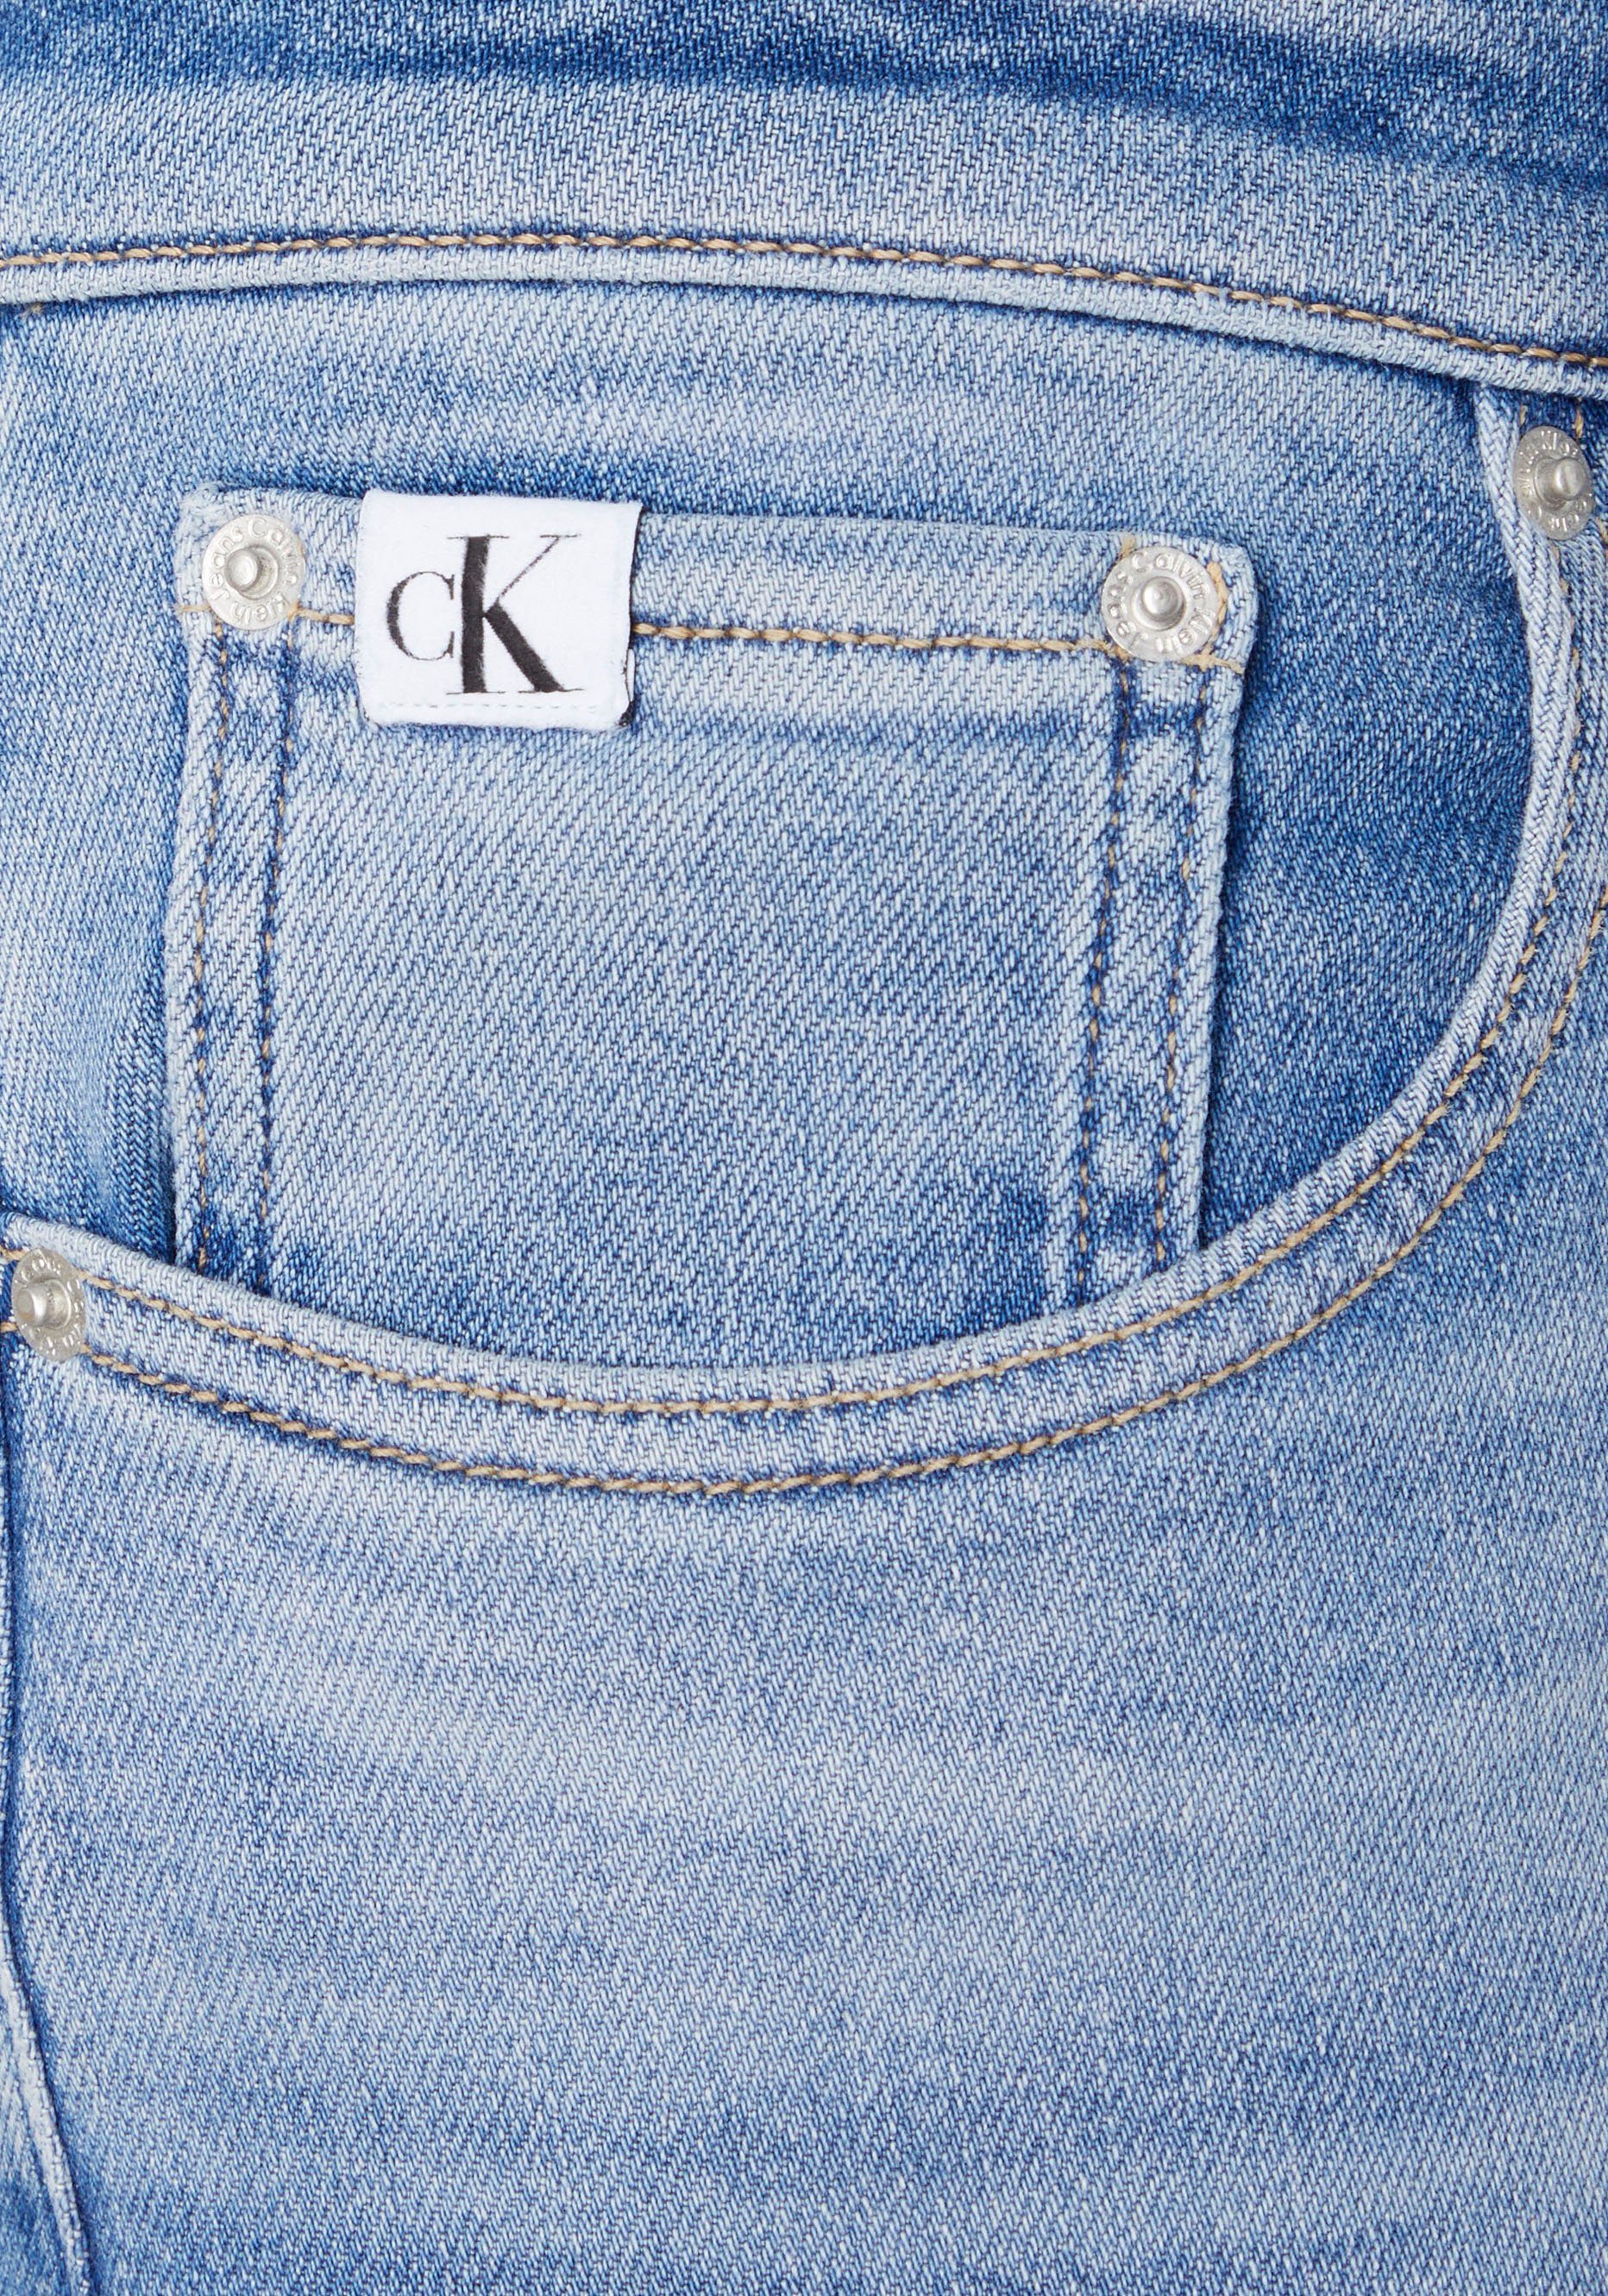 Calvin Klein Jeans im Medium 5-Pocket-Stil Skinny-fit-Jeans Denim